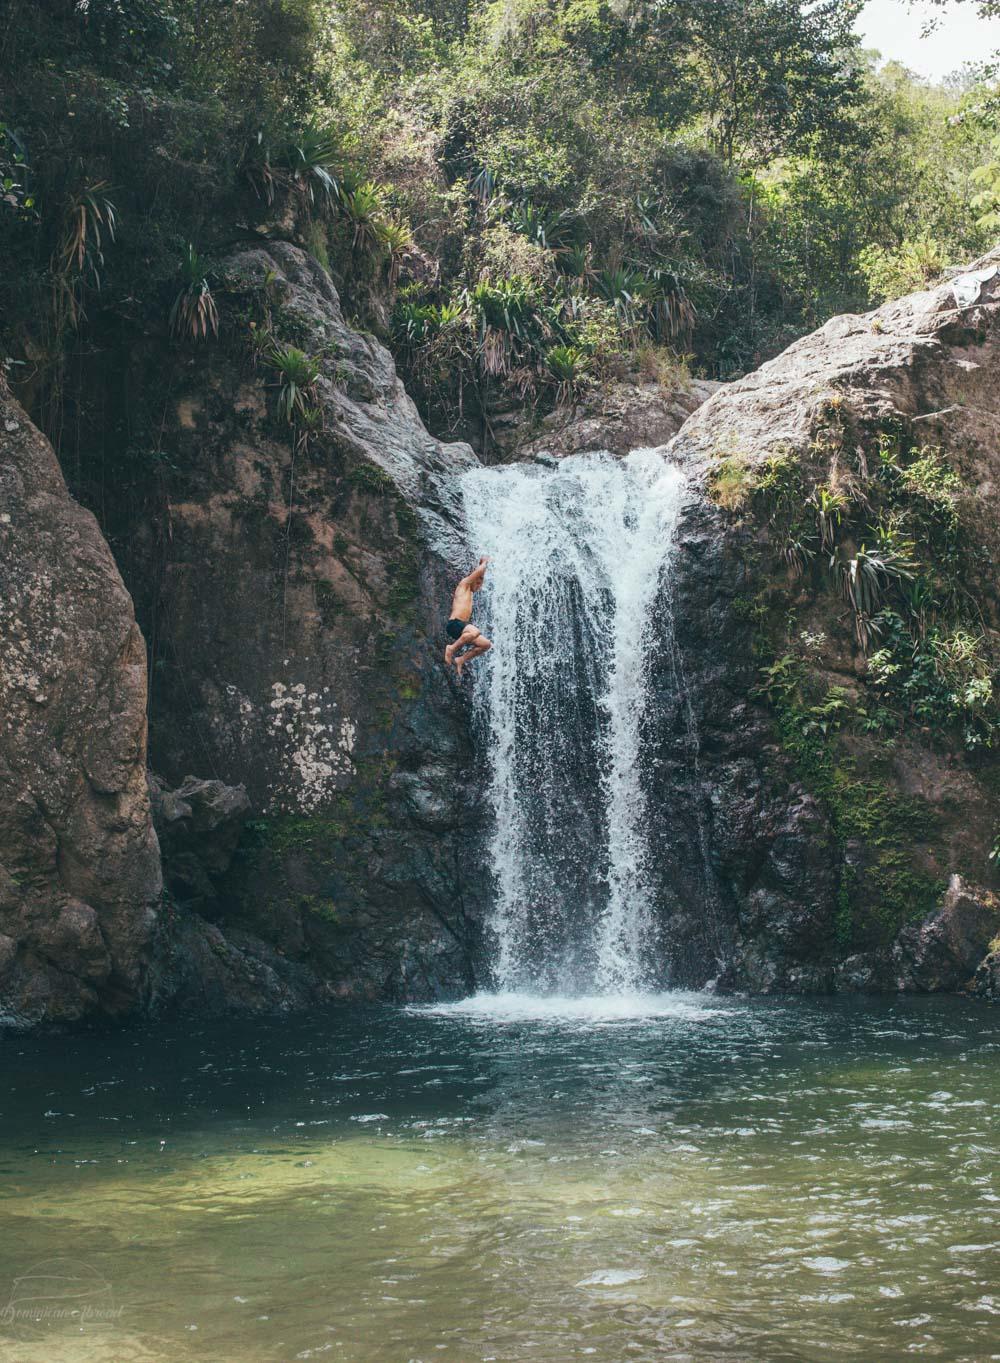 The Salto Secreto waterfall in the Jarahacoa region of the Dominican Republic.